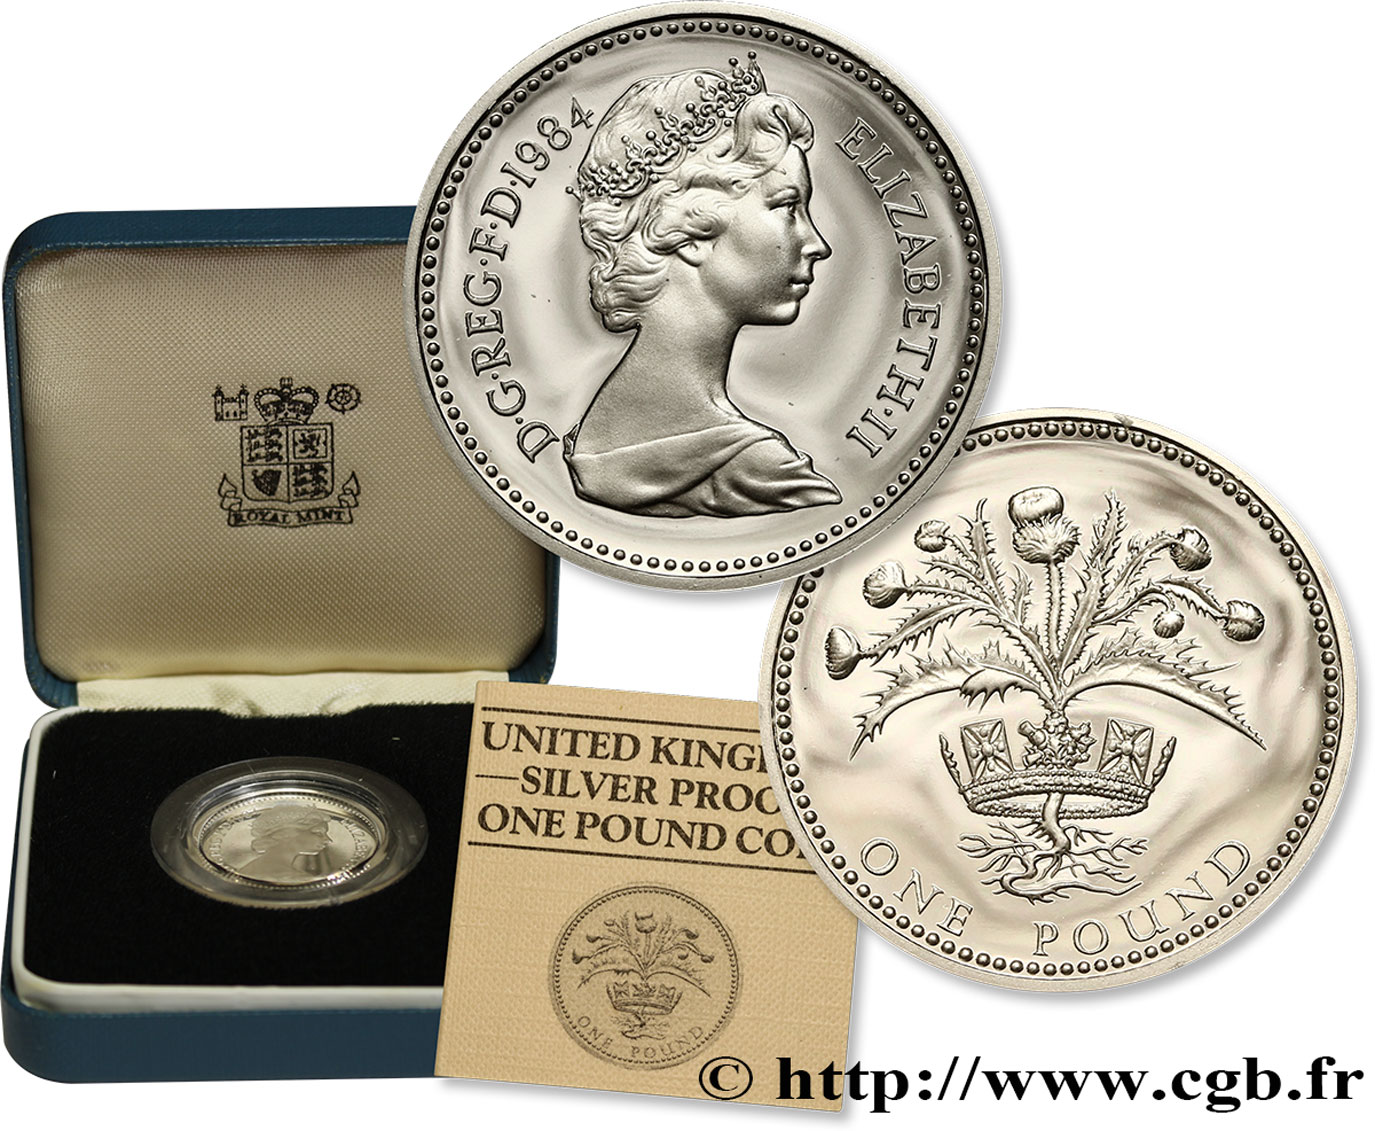 UNITED KINGDOM 1 Livre Proof Elisabeth II / chardon écossais 1984  MS 